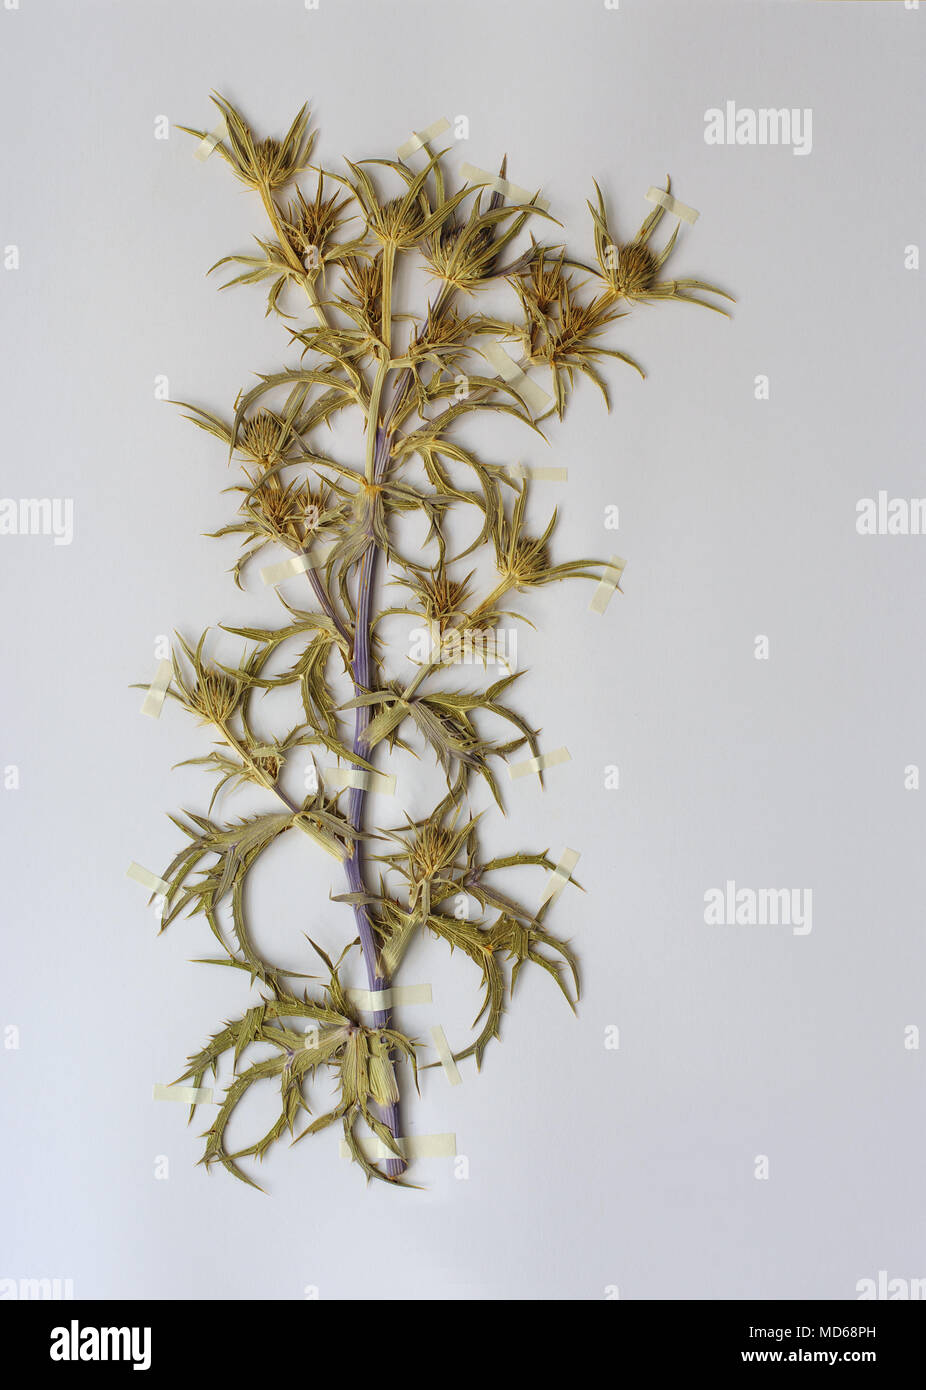 herbarium sheet with Eryngium amethystinum, the Amethyst eryngo or Italian eryngo, family Apiaceae Stock Photo